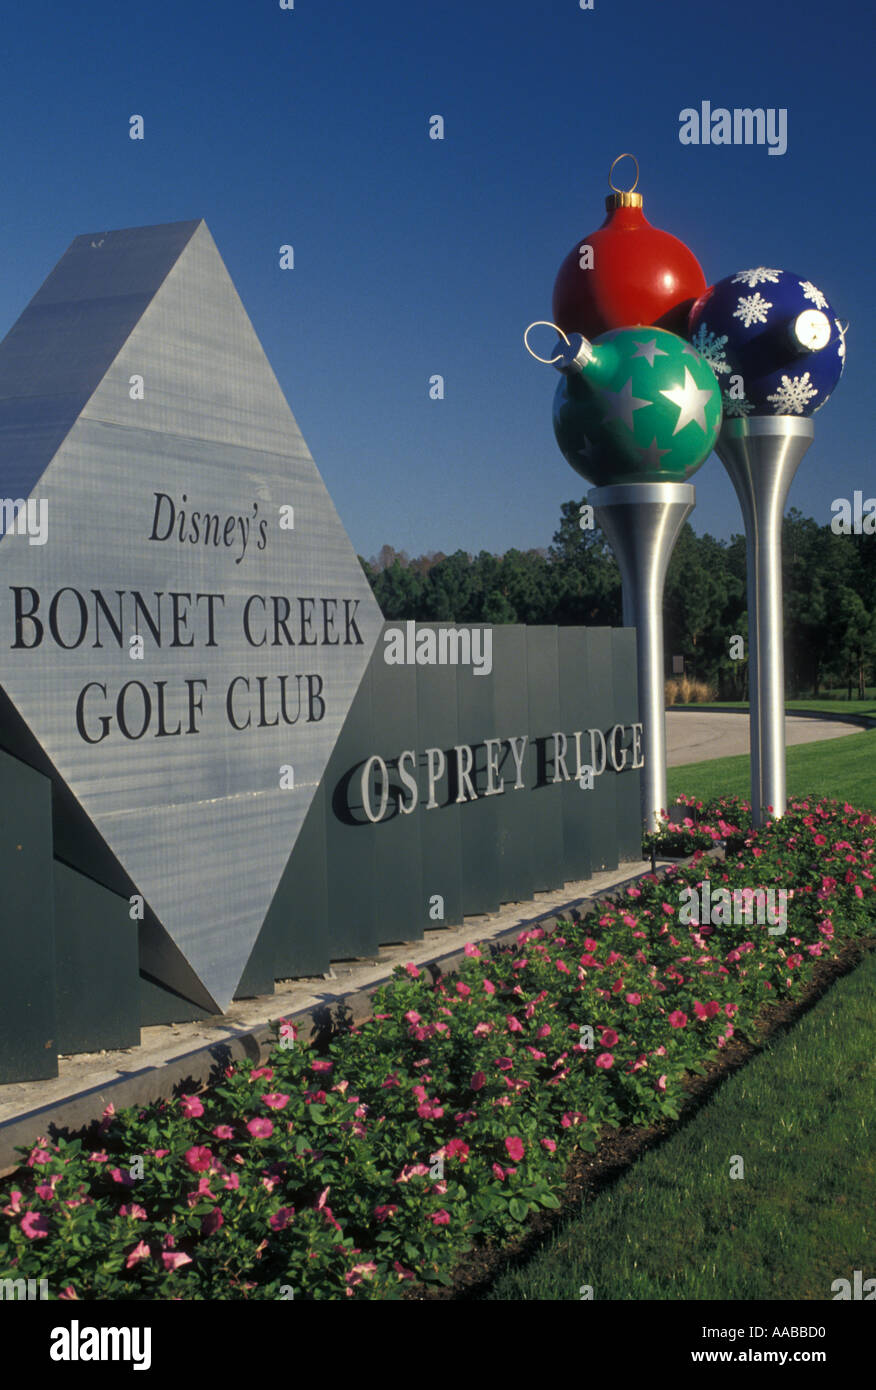 Walt disney golf hi-res stock photography and images - Alamy